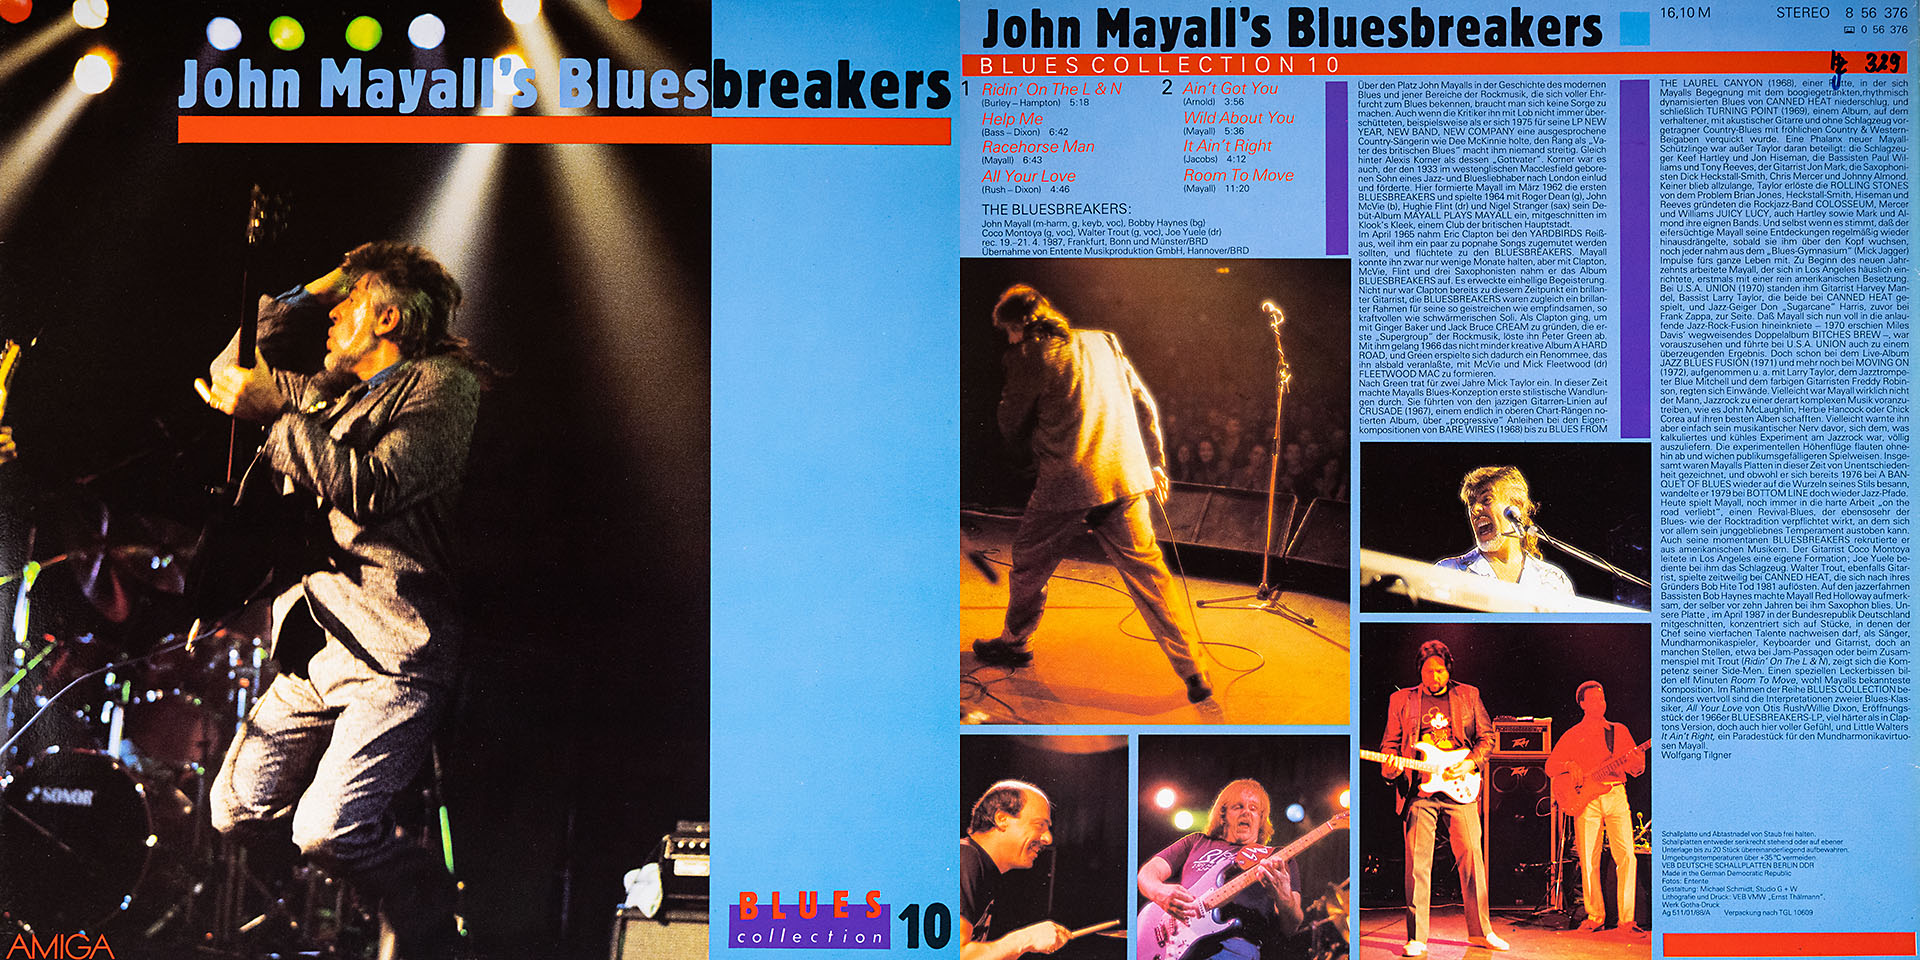 Blues Collection 10 - John Mayall's Bluesbreakers